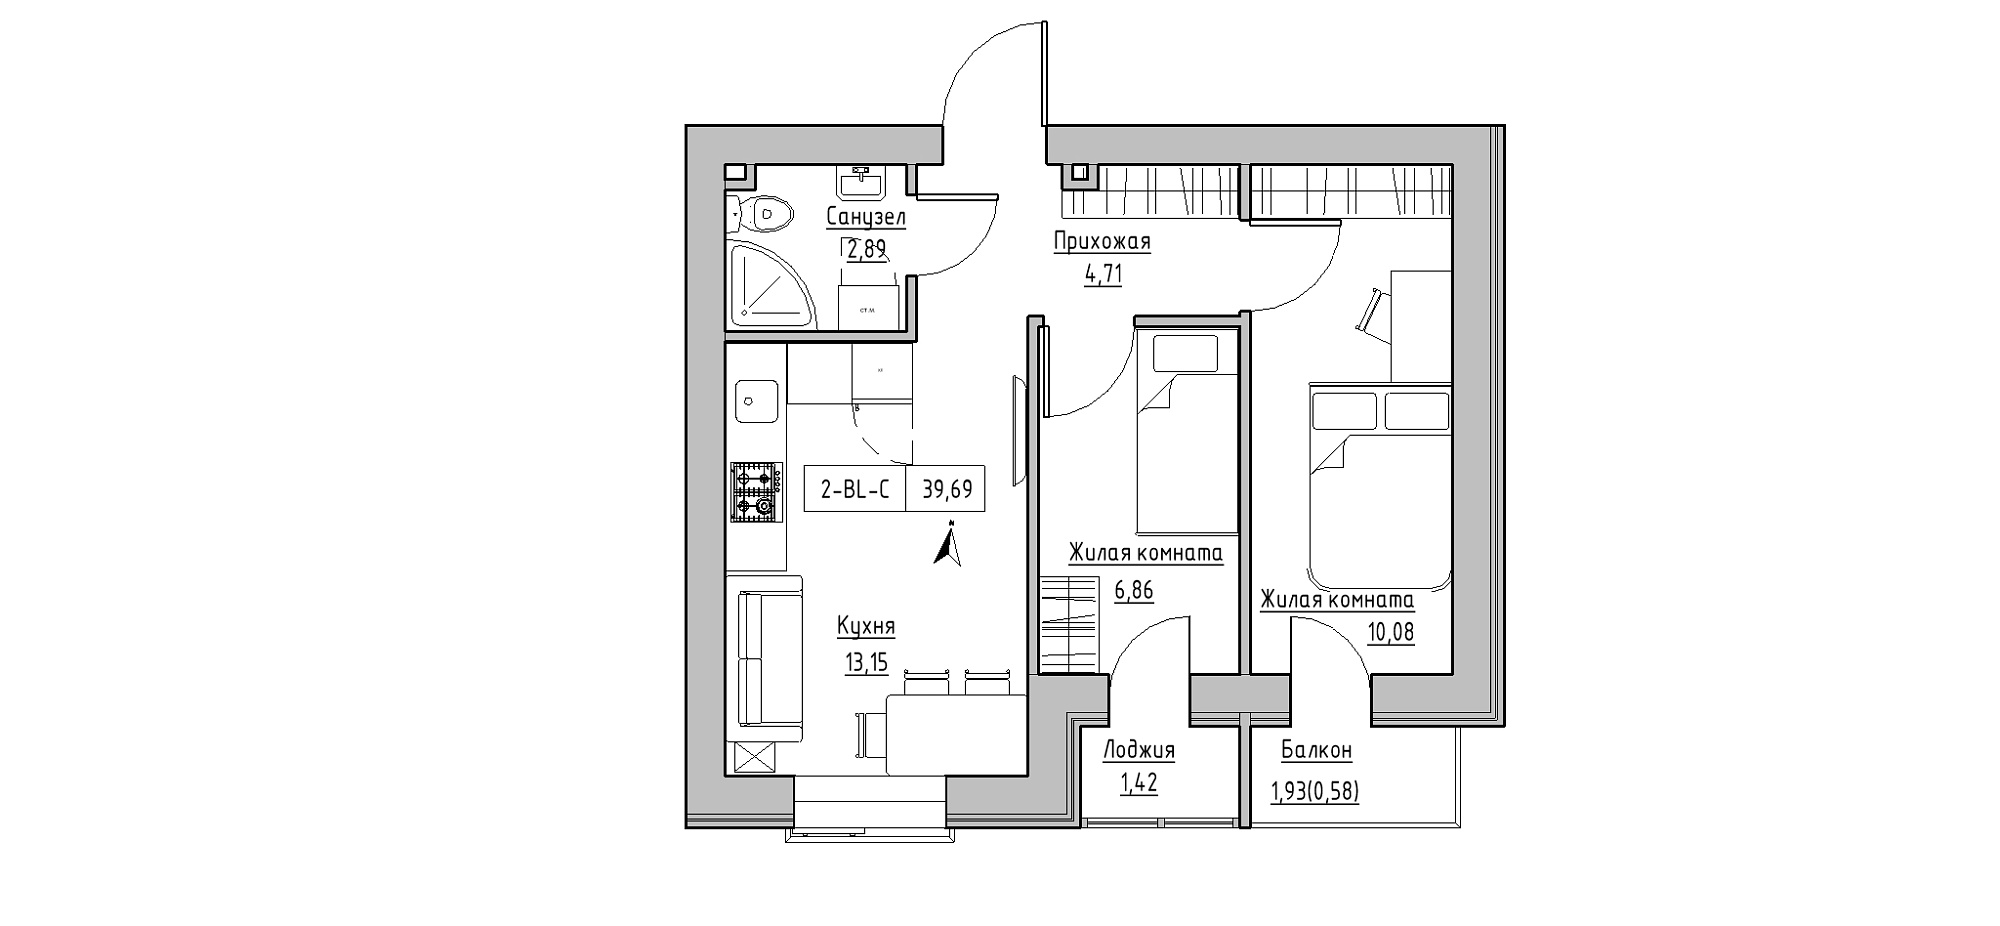 Planning 2-rm flats area 39.69m2, KS-020-03/0005.